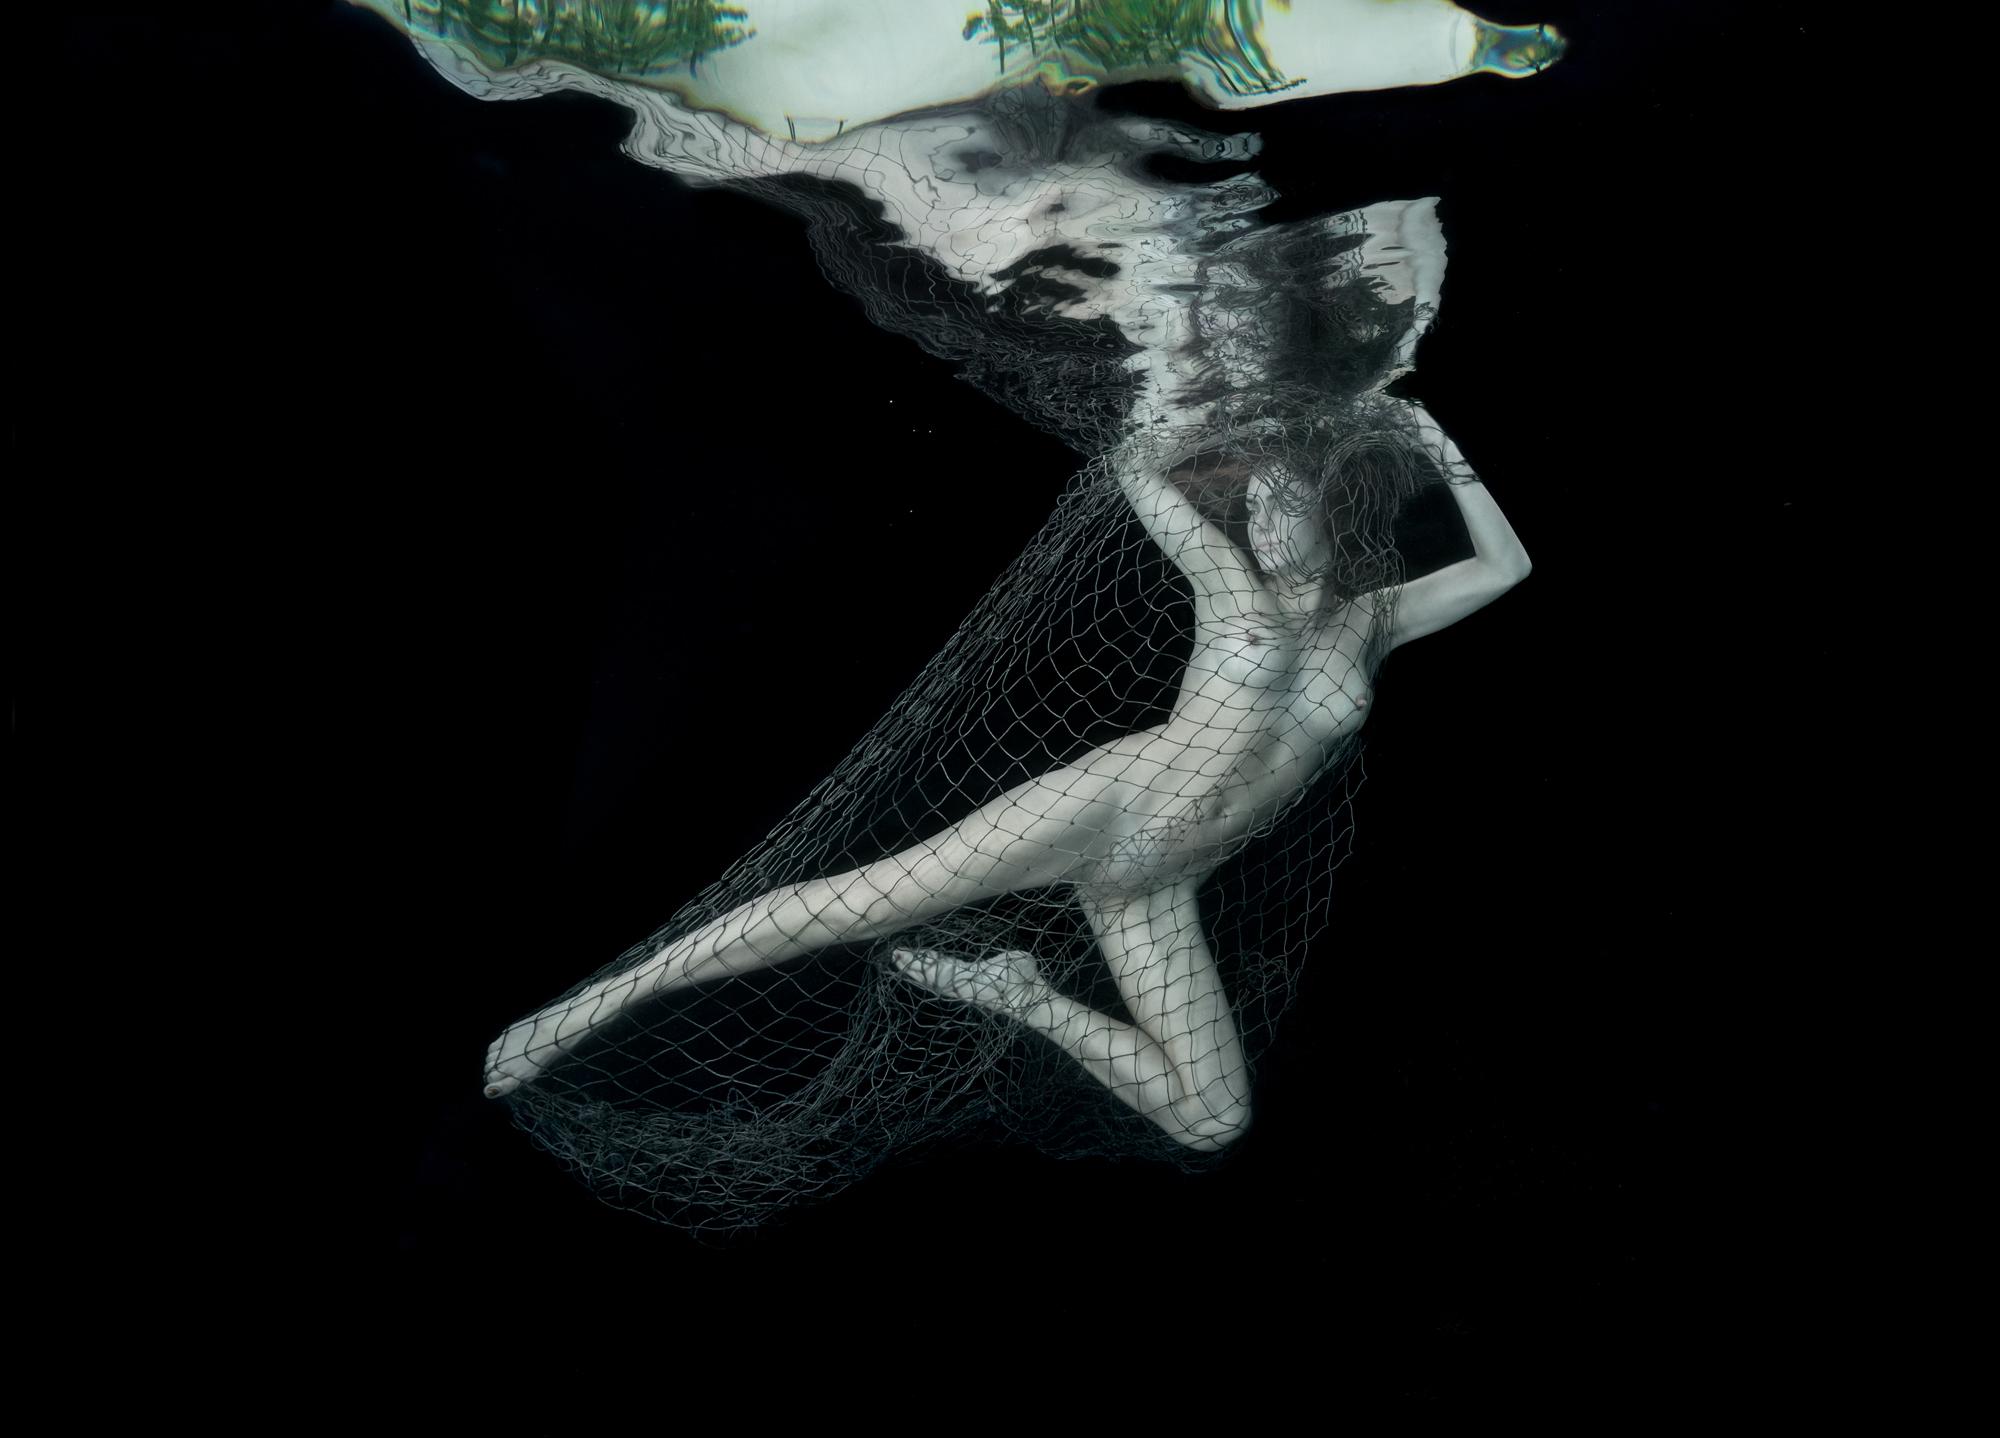 Alex Sher Figurative Photograph - Winter Fishing - underwater nude photograph - print on aluminum 8" x 12"